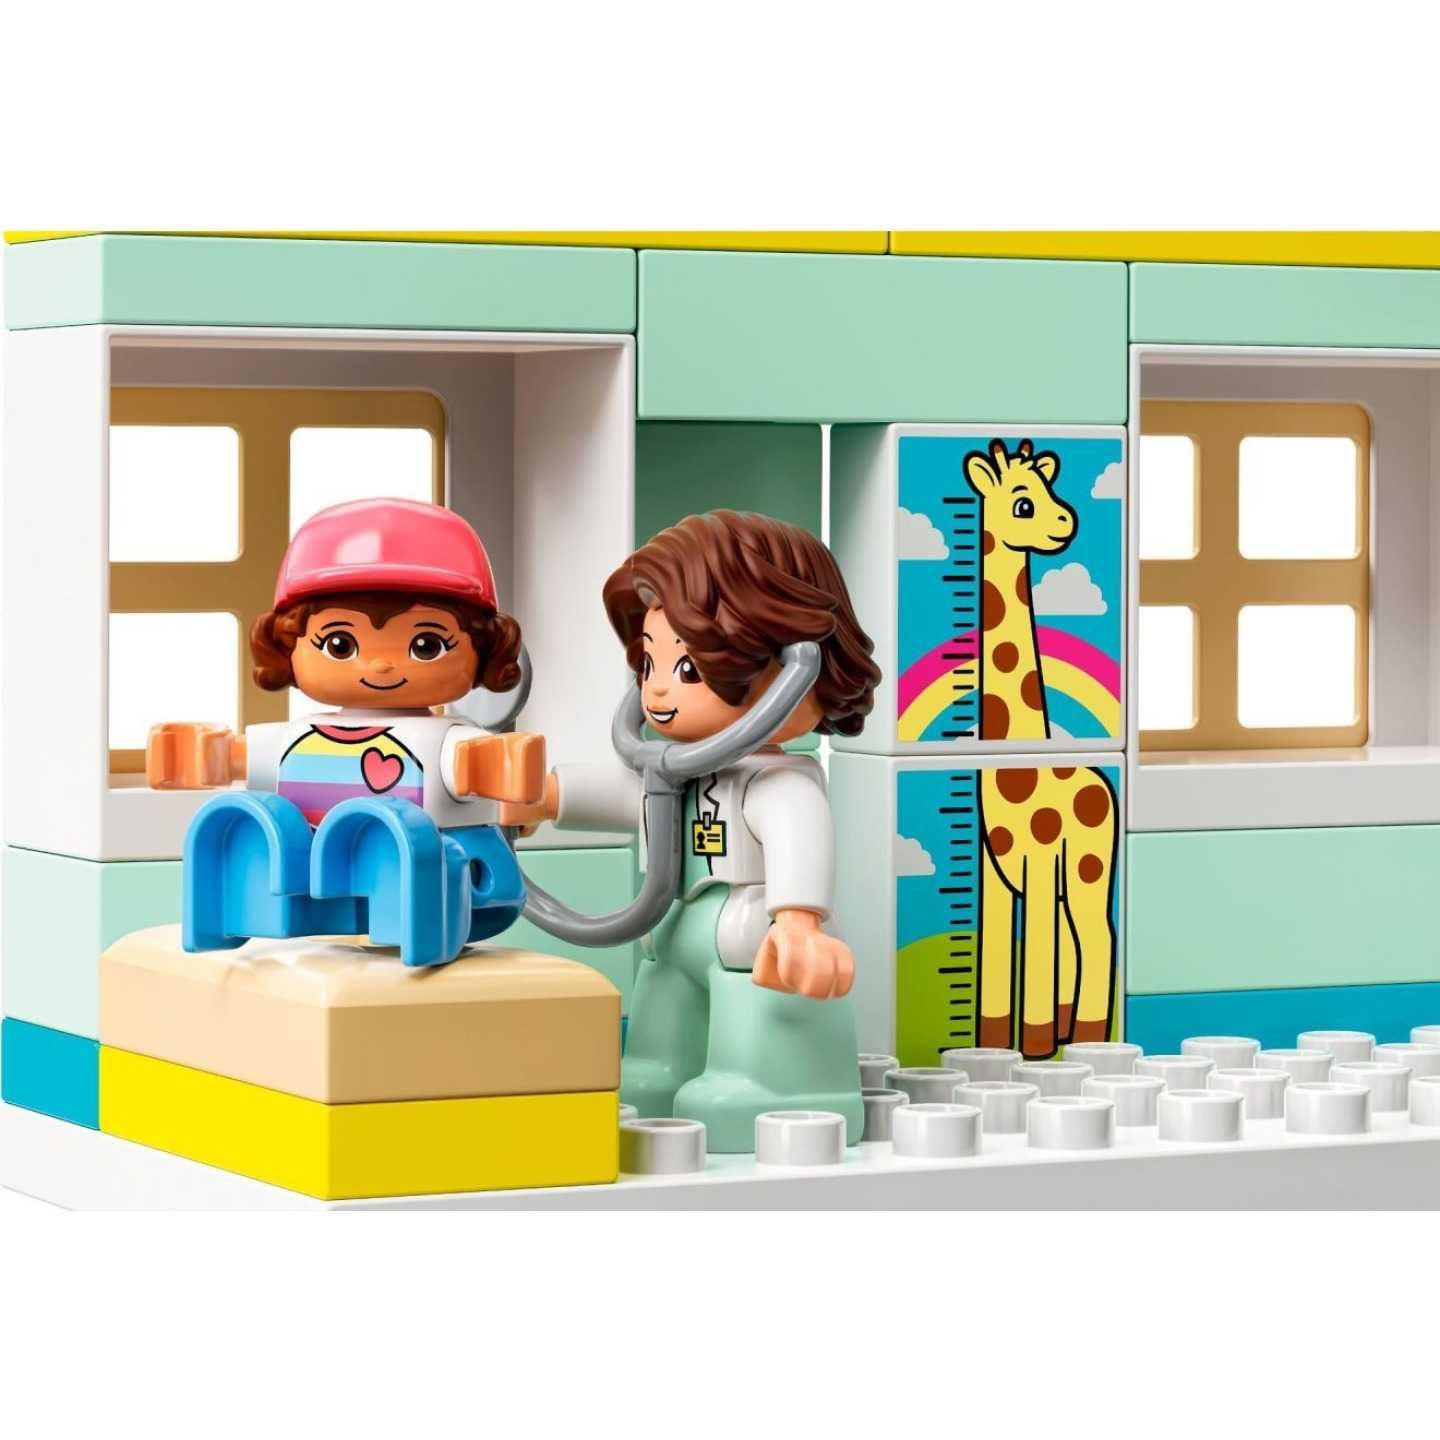 Lego Duplo 10968 Поход к врачу. В наличии